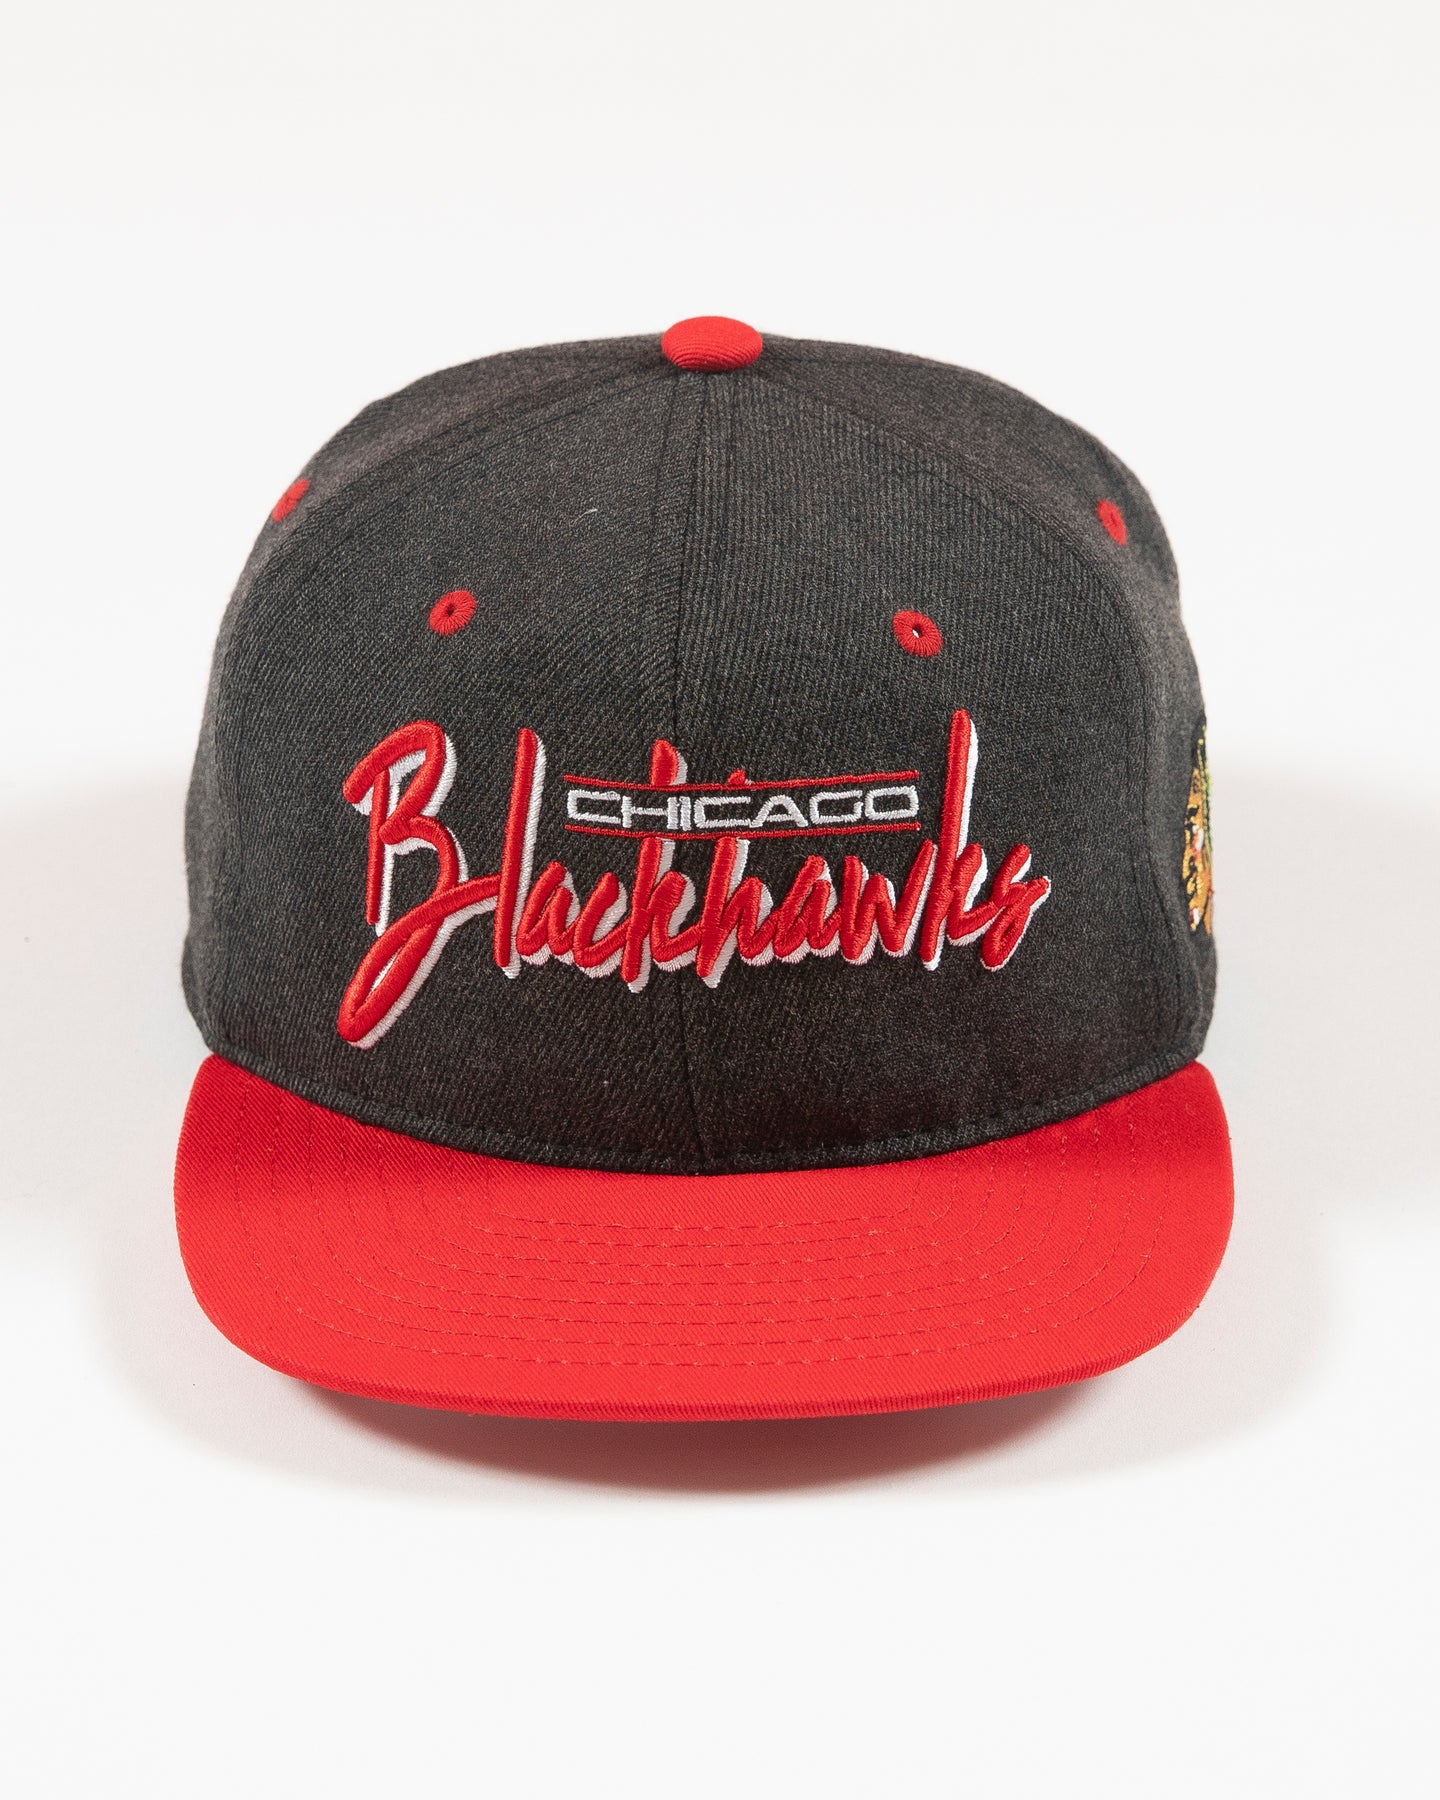 Outerstuff Reverse Retro Adjustable Meshback Hat - Chicago Blackhawks -  Youth